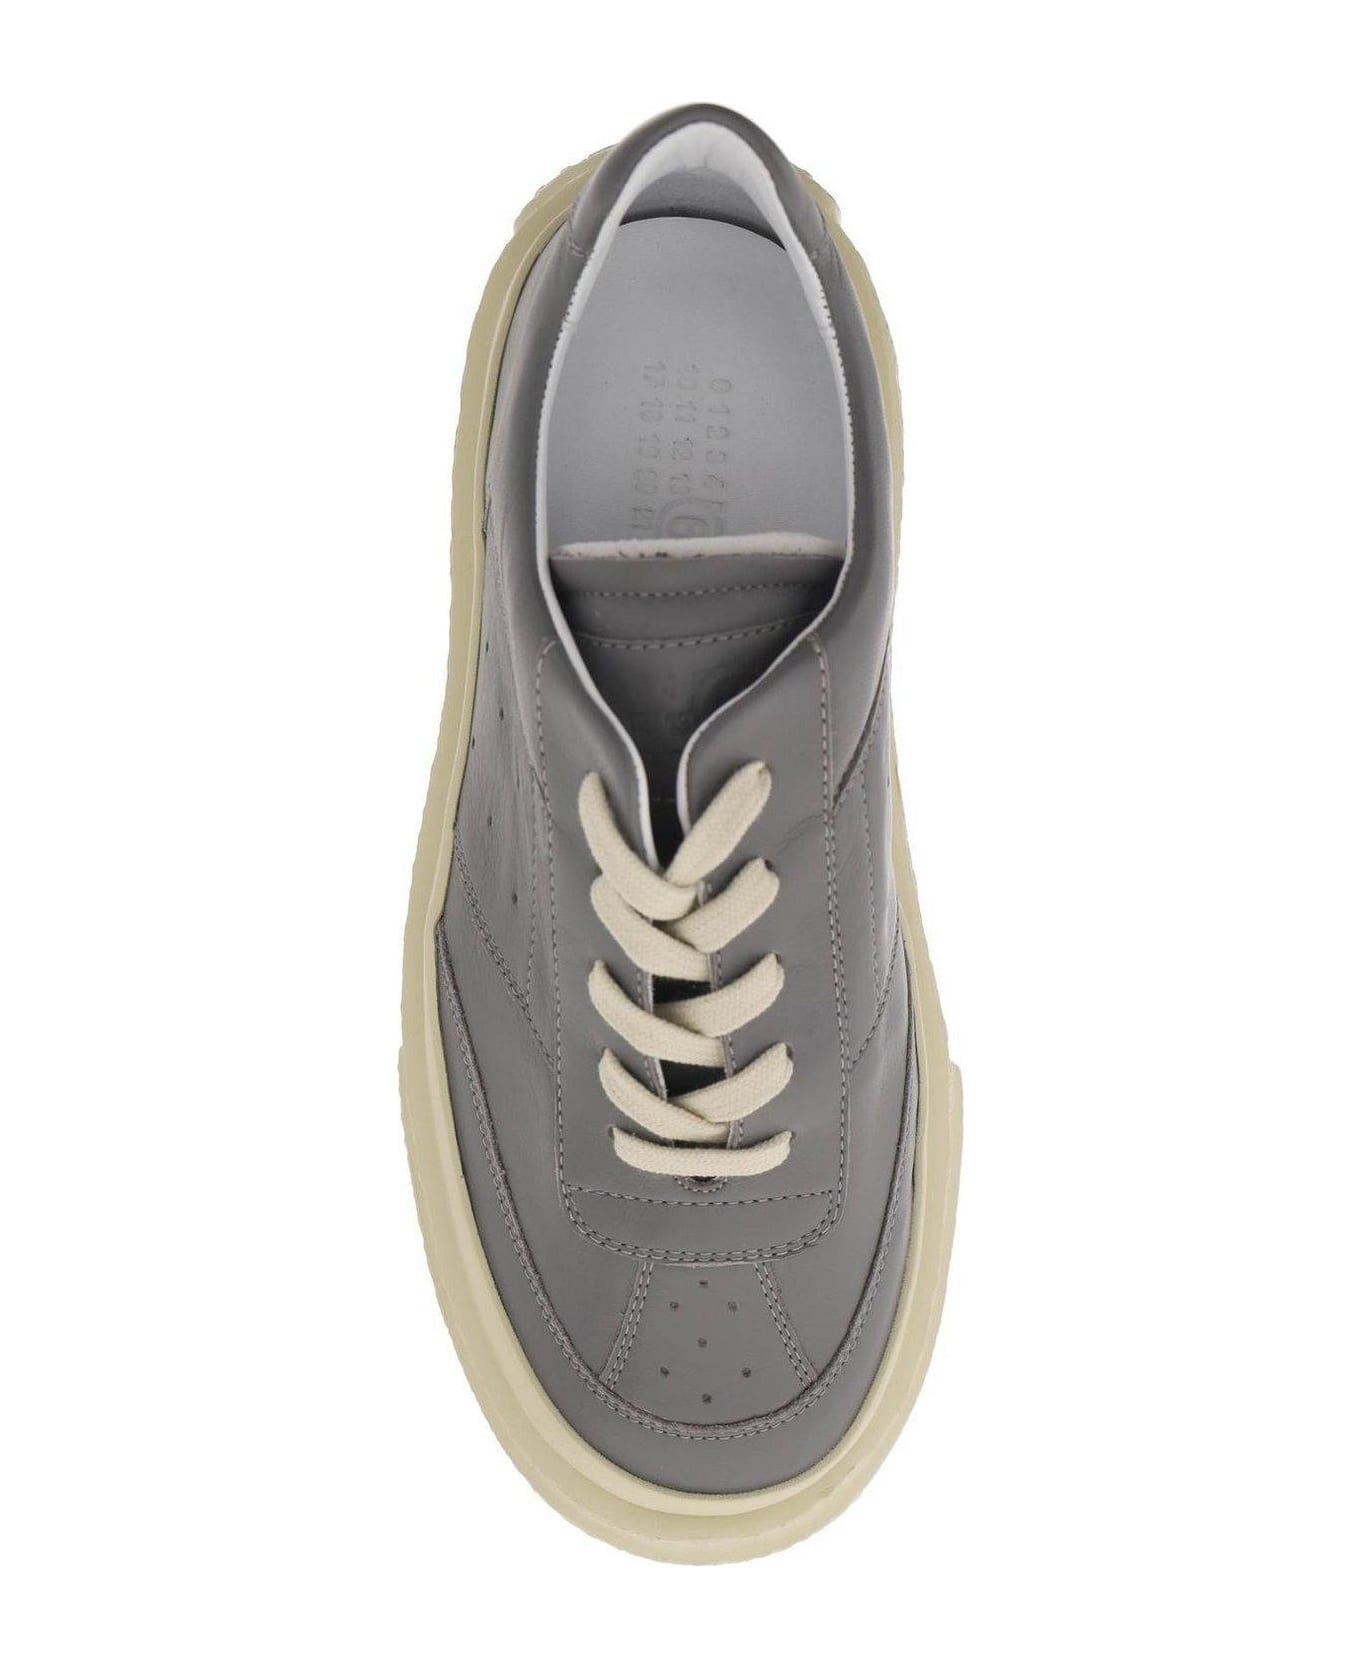 MM6 Maison Margiela Round Toe Platform Sneakers - CHARCOAL GRAY (Grey)